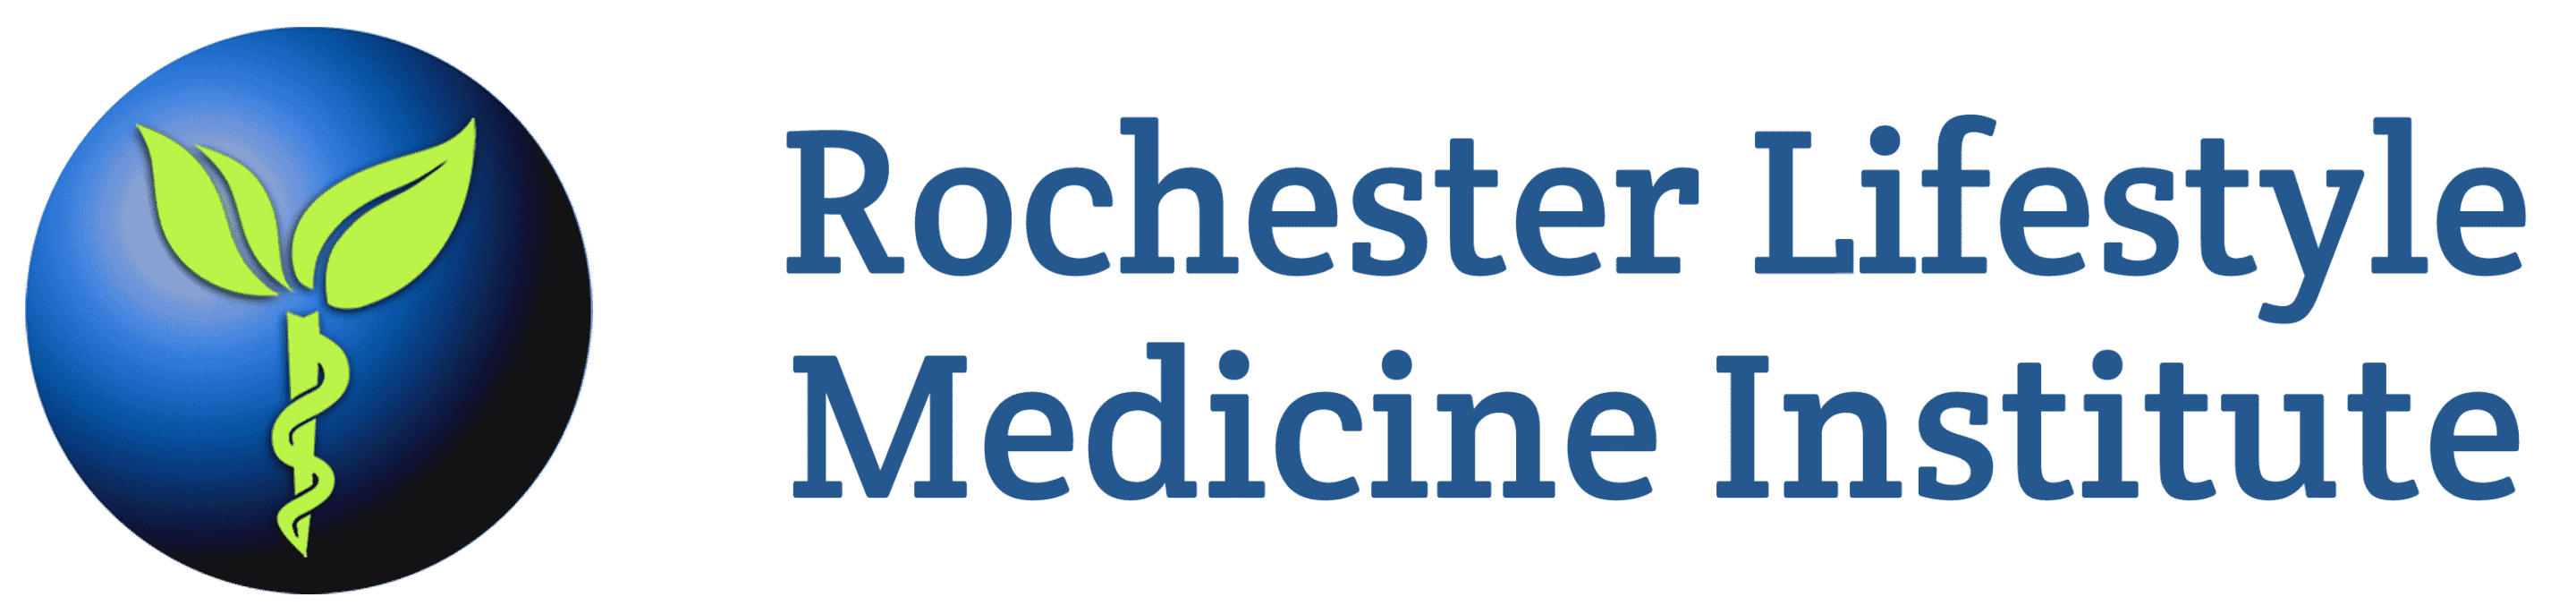 logo-rochester-lifestyle-medicine-institute